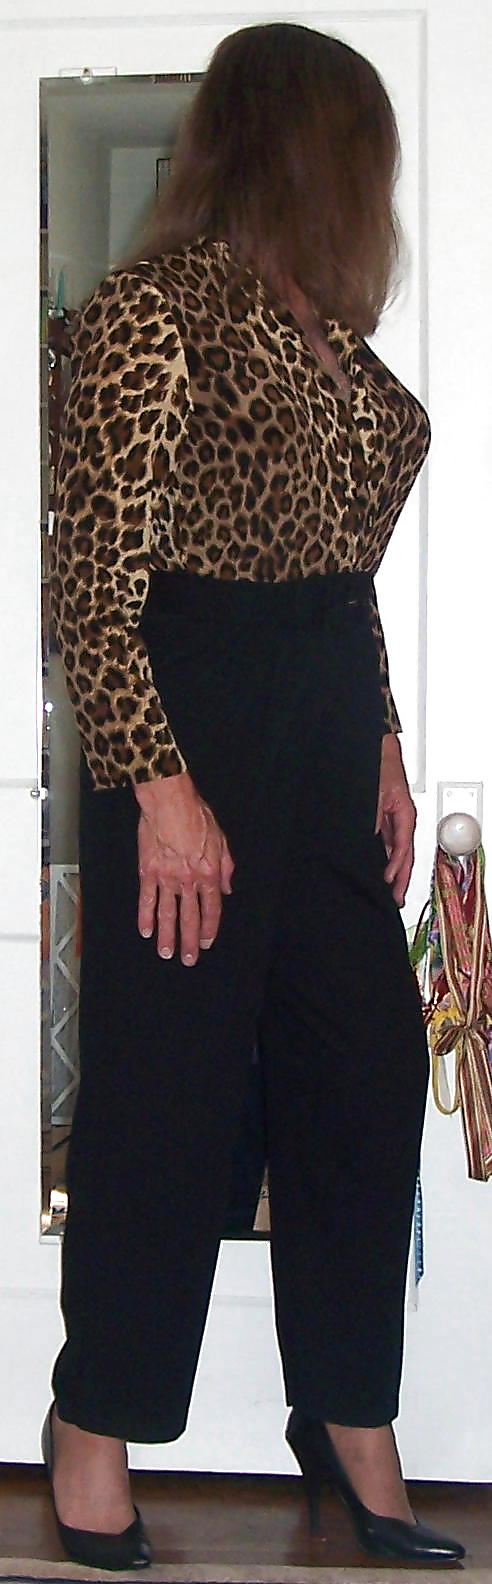 Crossdressing - ragazza leopardo
 #7202757